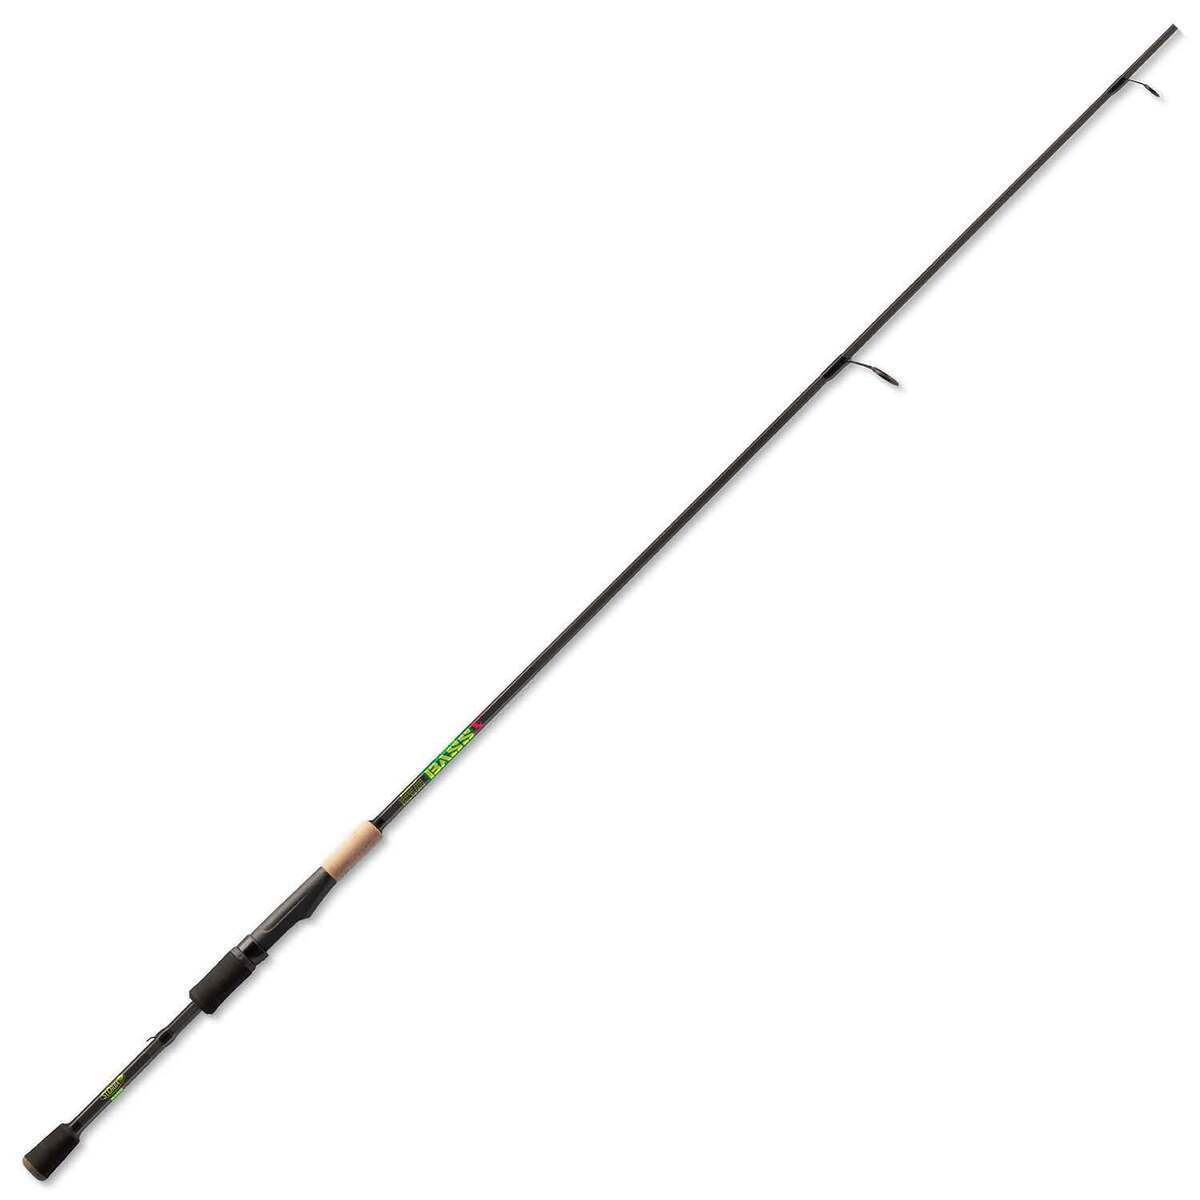 St. Croix Bass X Spinning Rod - Past Season Model